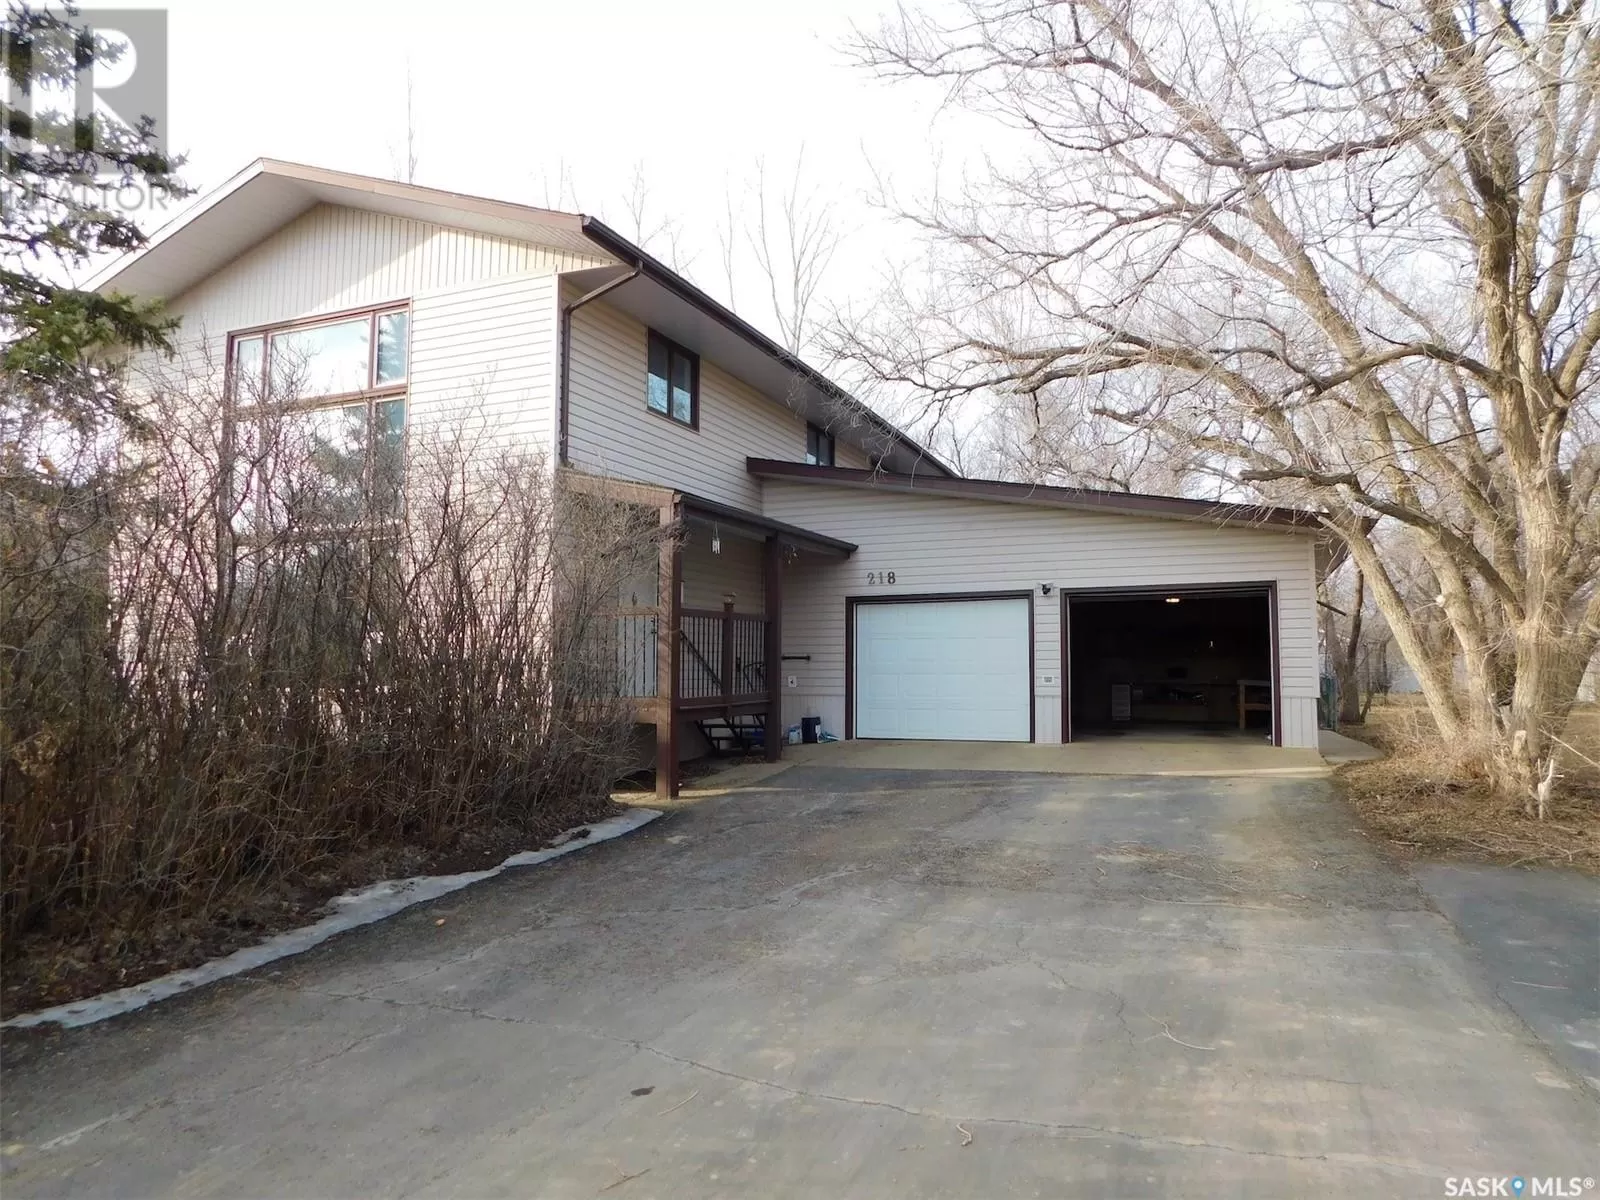 House for rent: 218 South Avenue, Coronach, Saskatchewan S0H 0Z0